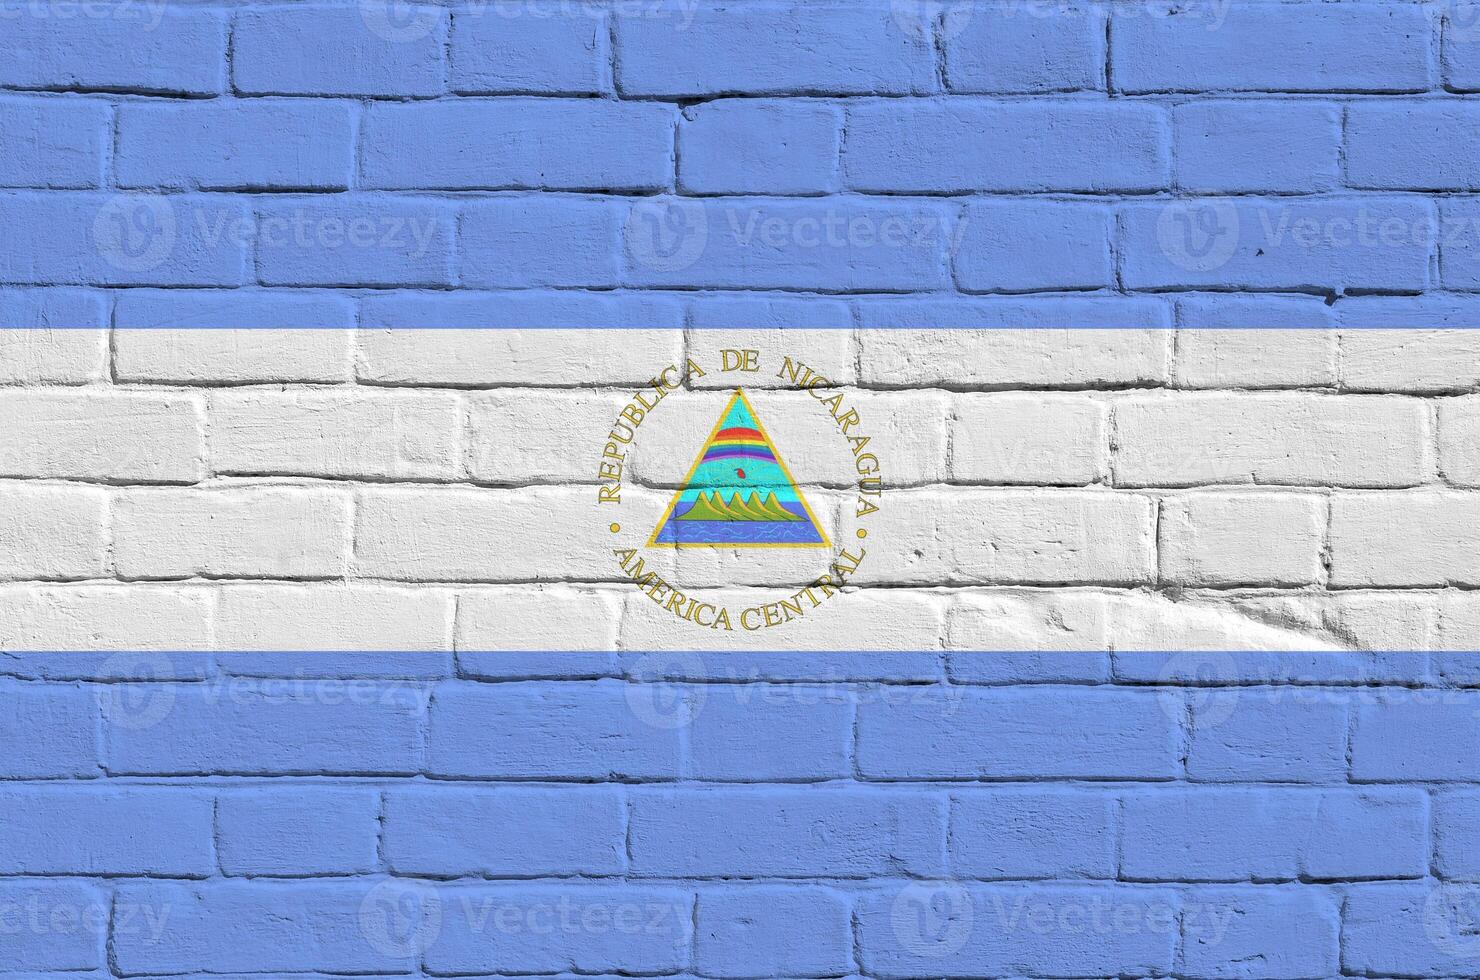 Nicaragua vlag afgebeeld in verf kleuren Aan oud steen muur. getextureerde banier Aan groot steen muur metselwerk achtergrond foto